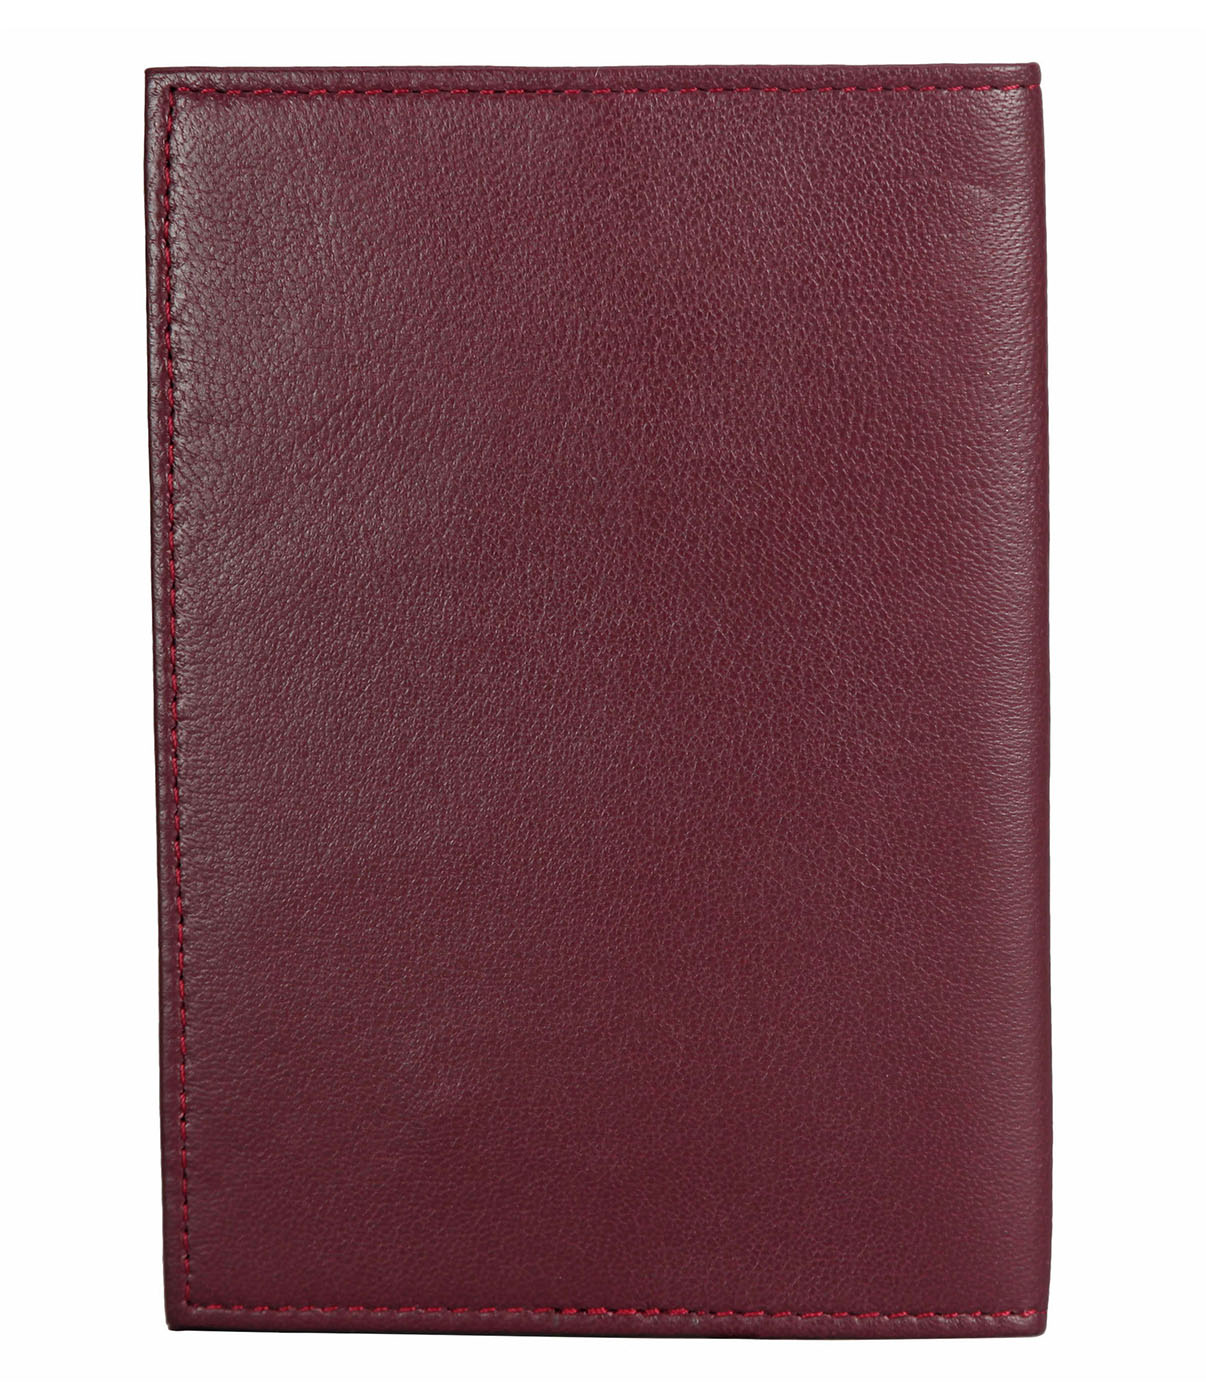 W73--Passport cover in Genuine Leather - Wine